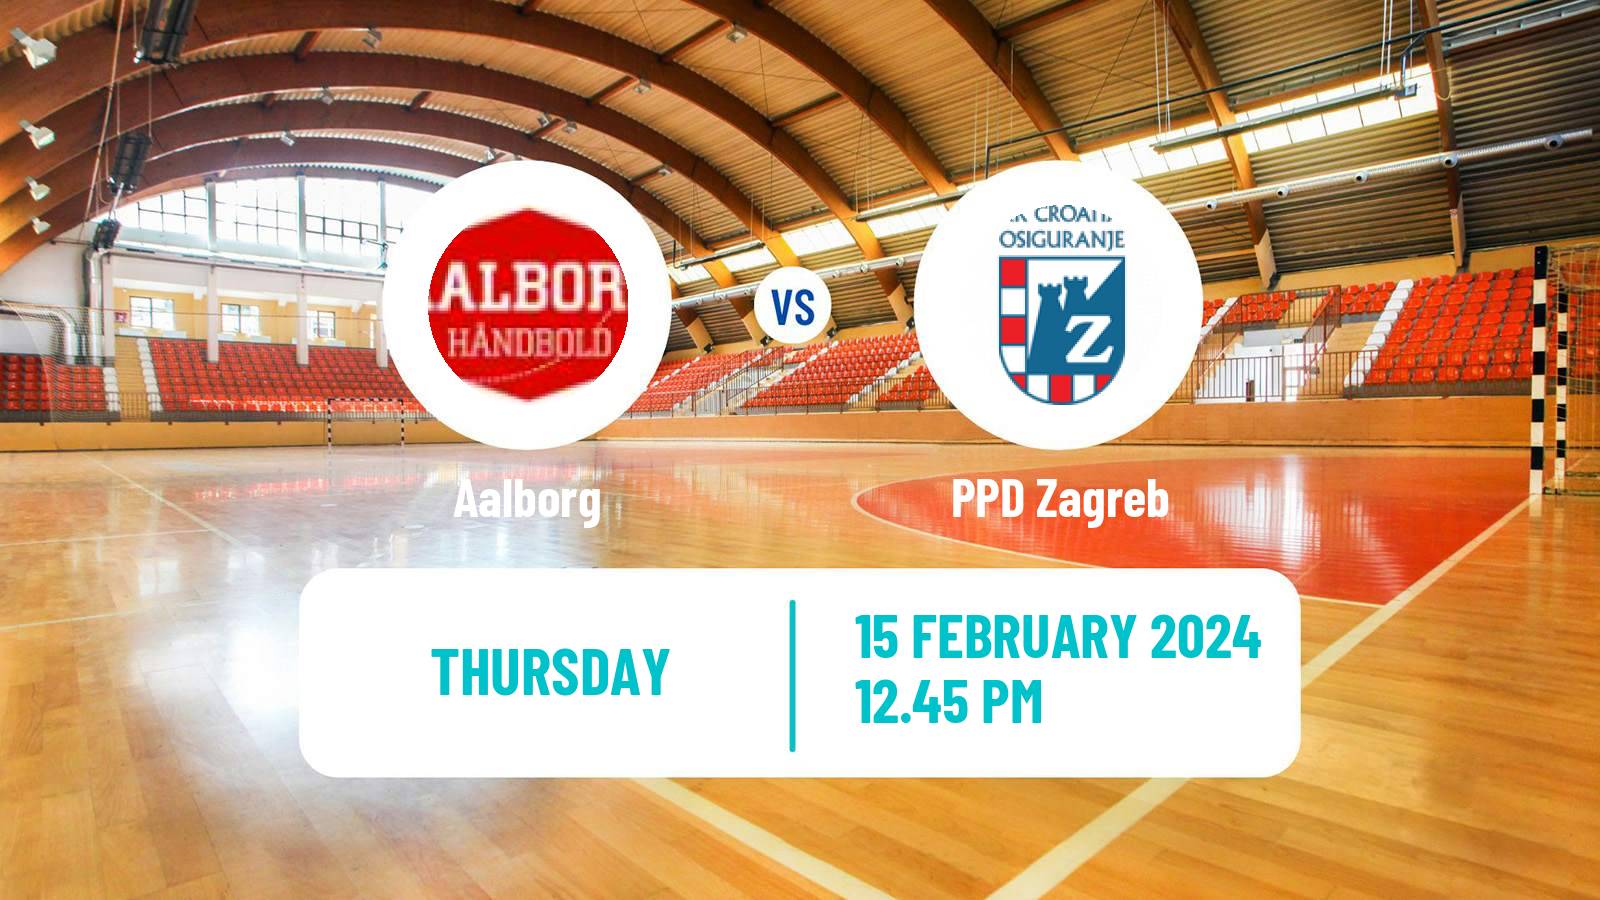 Handball EHF Champions League Aalborg - PPD Zagreb